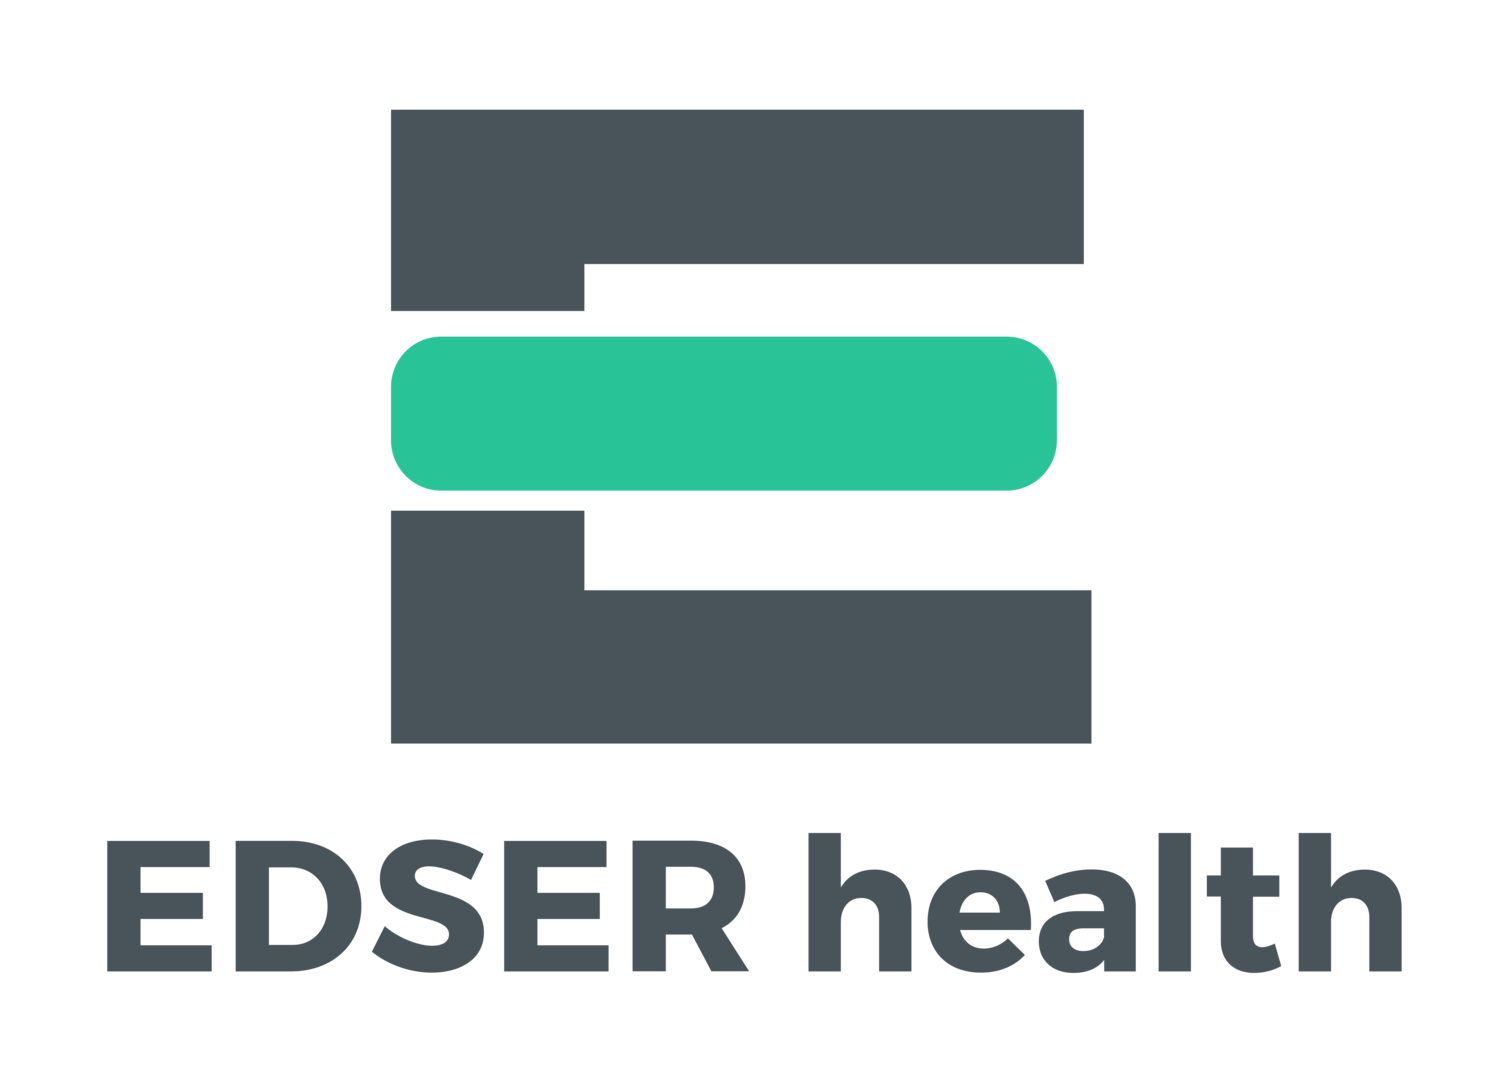 EDSER health